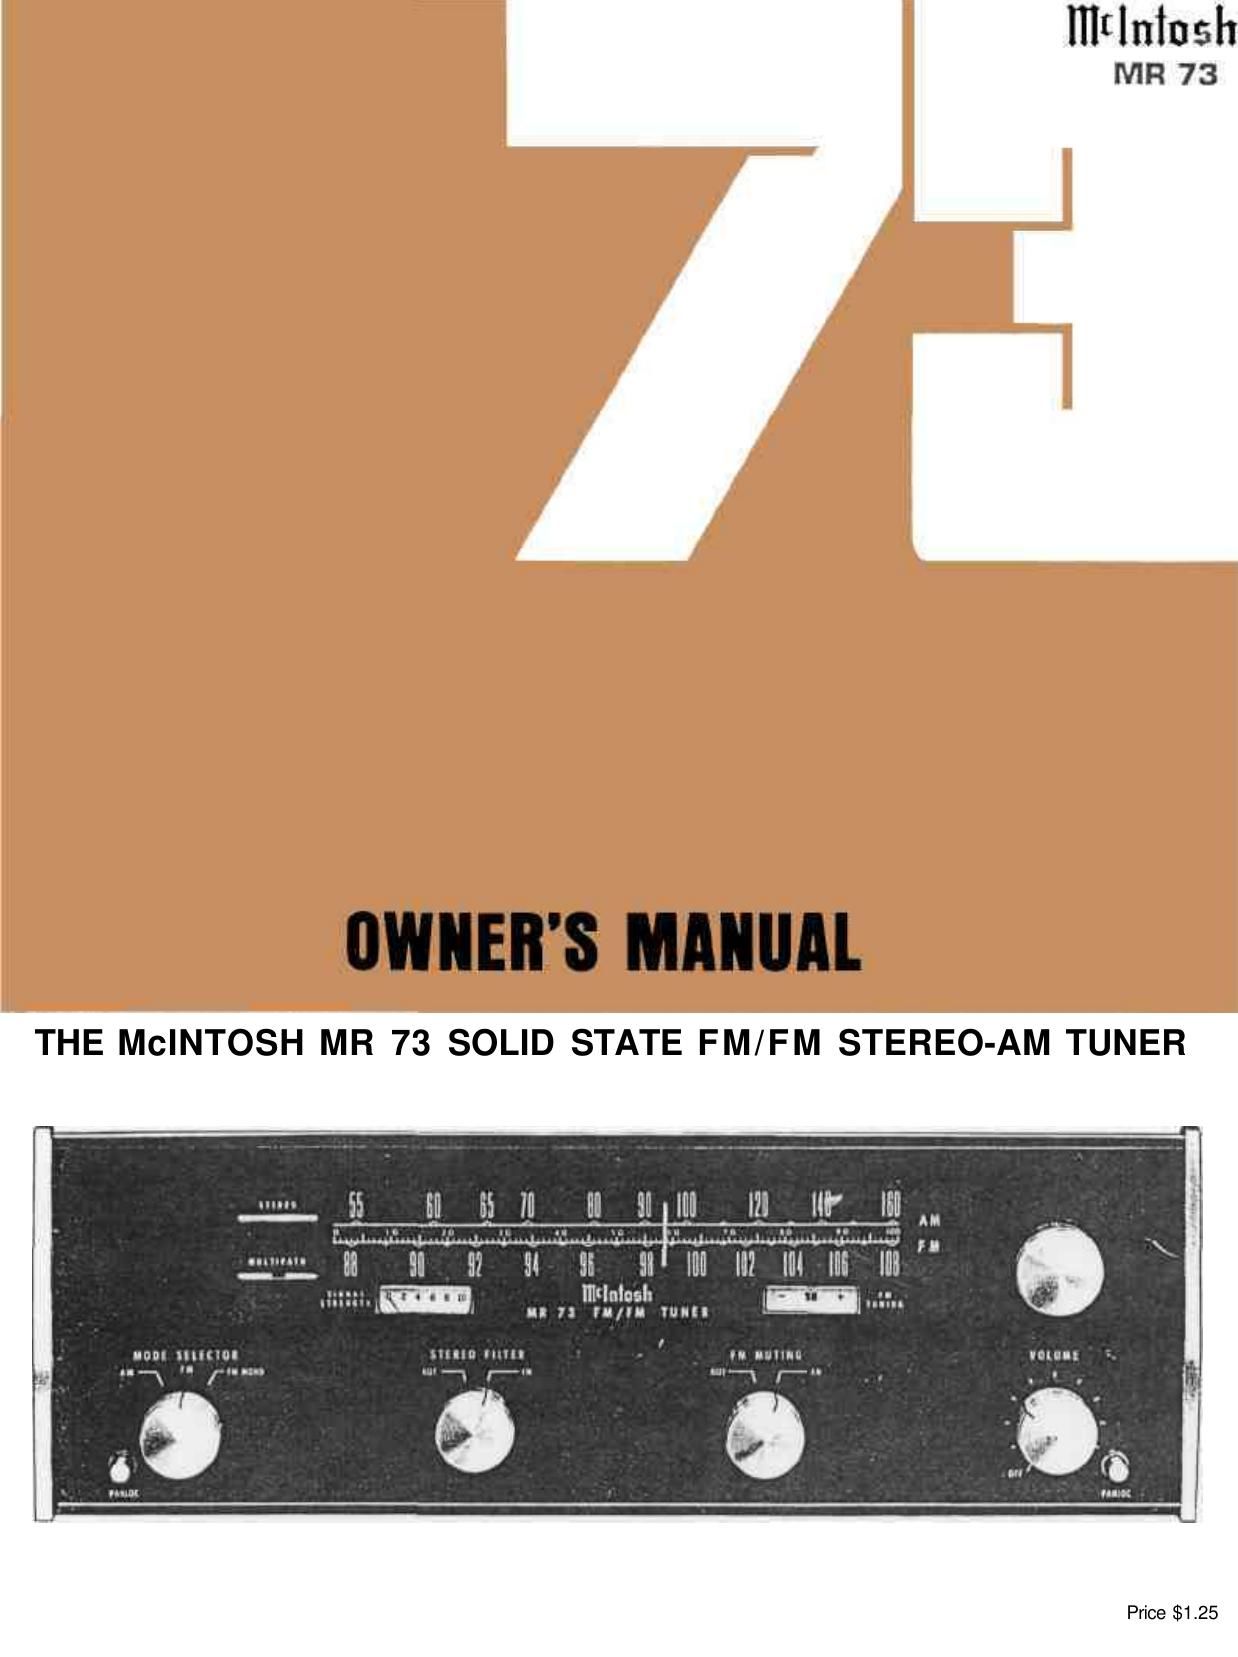 McIntosh MR 73 Owners Manual